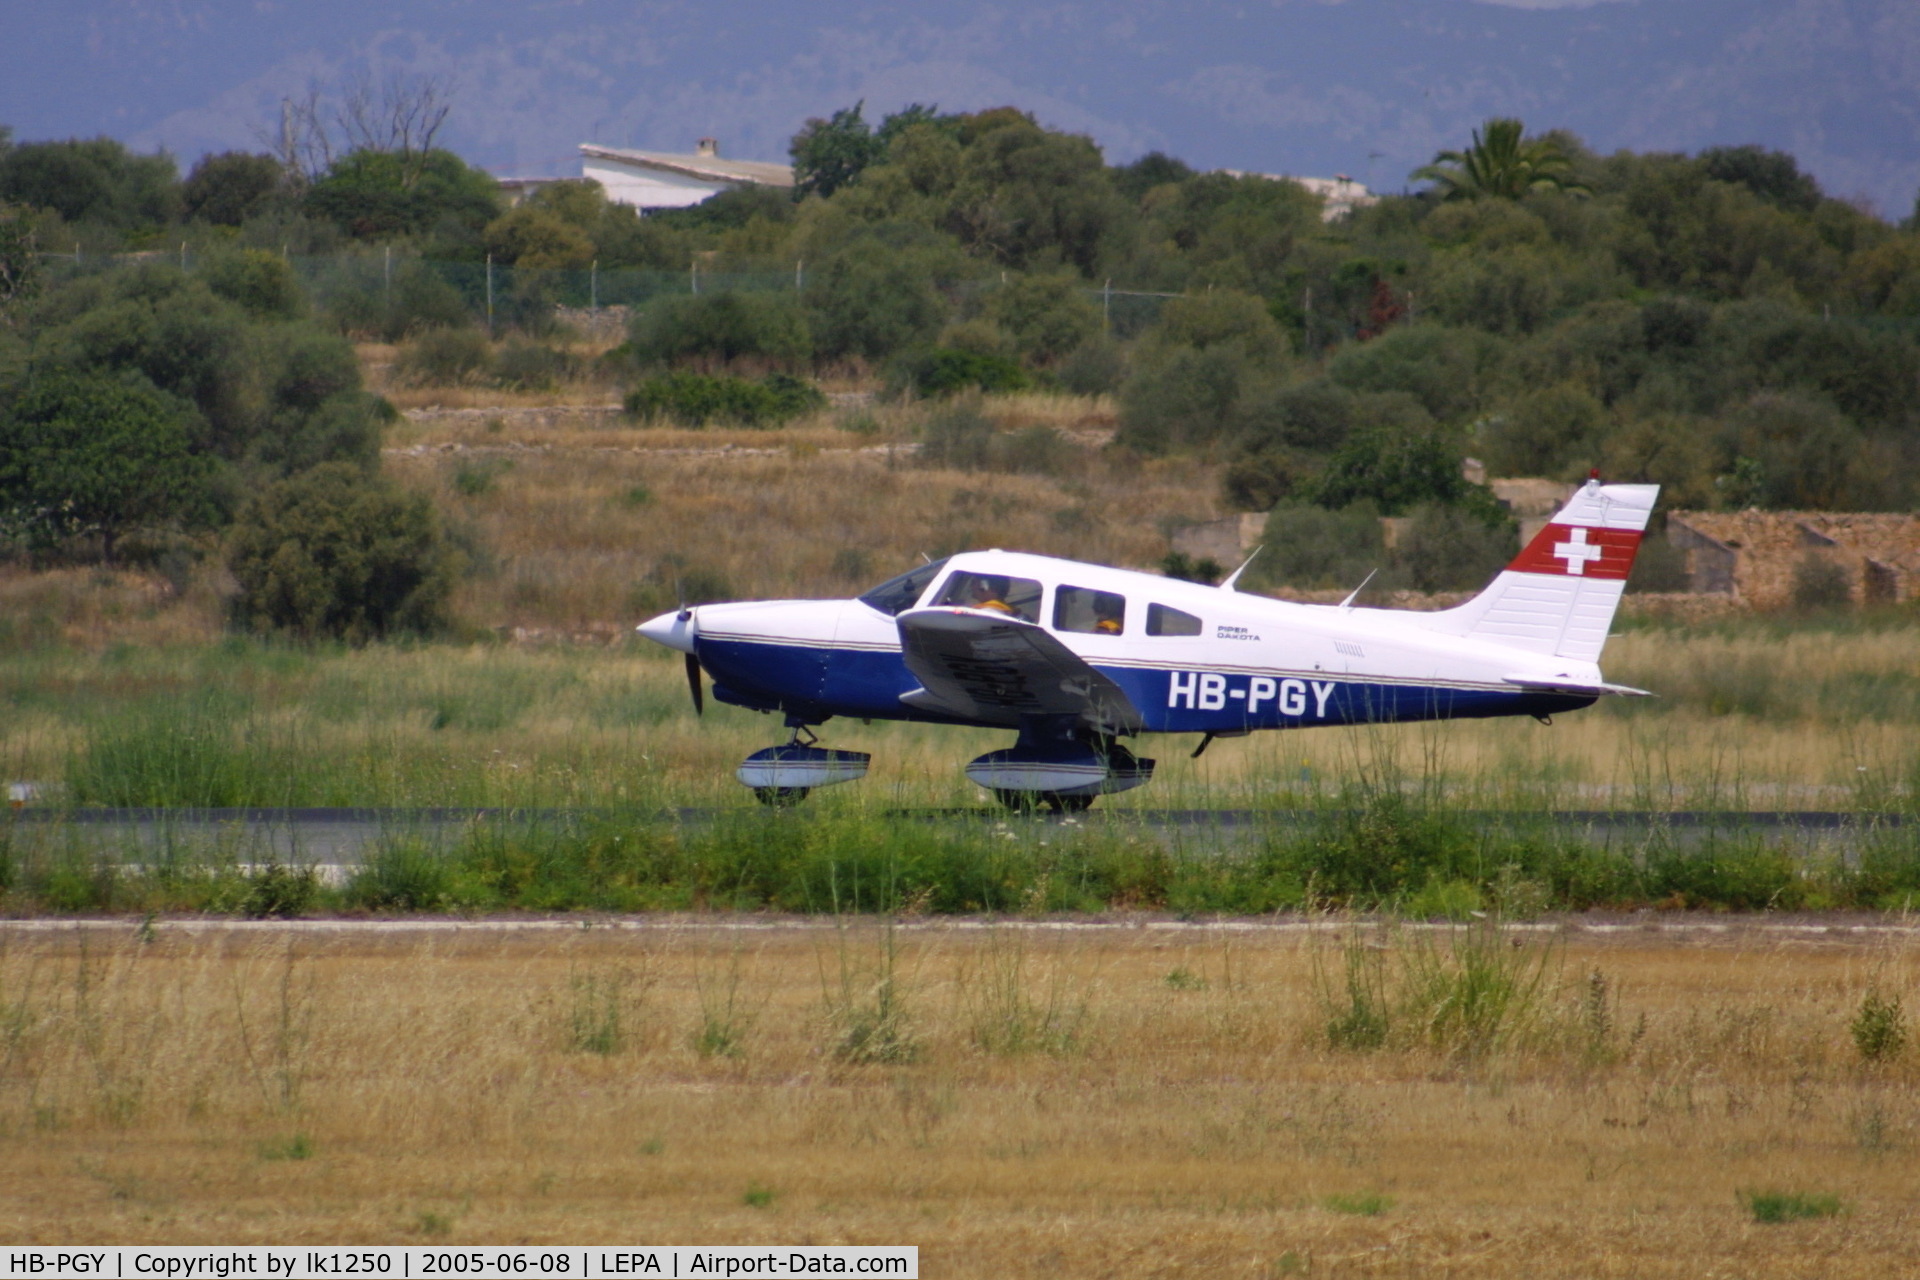 HB-PGY, 1982 Piper PA-28-236 Dakota C/N 28-8311009, This Piper PA-28-236 Dakota landed at Palma de Mallorca in June 2005